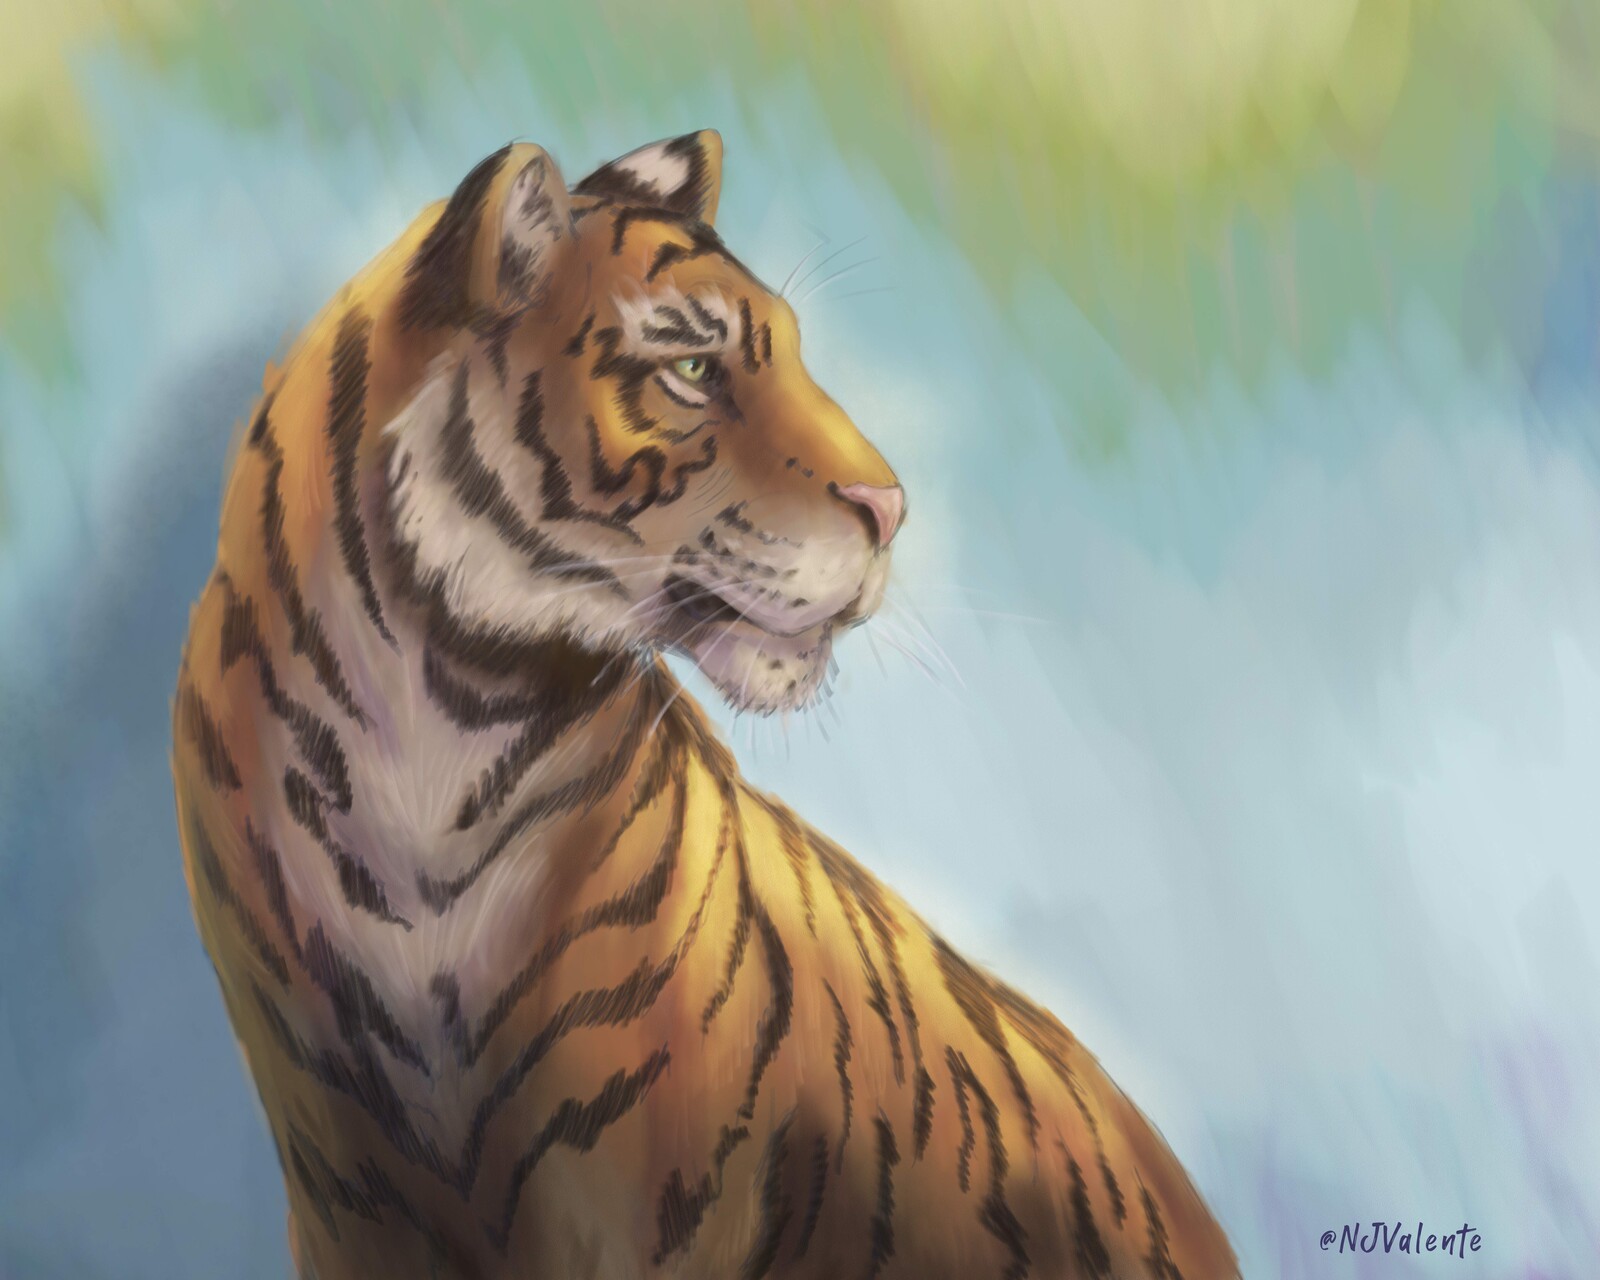 Tiger Digital Painting